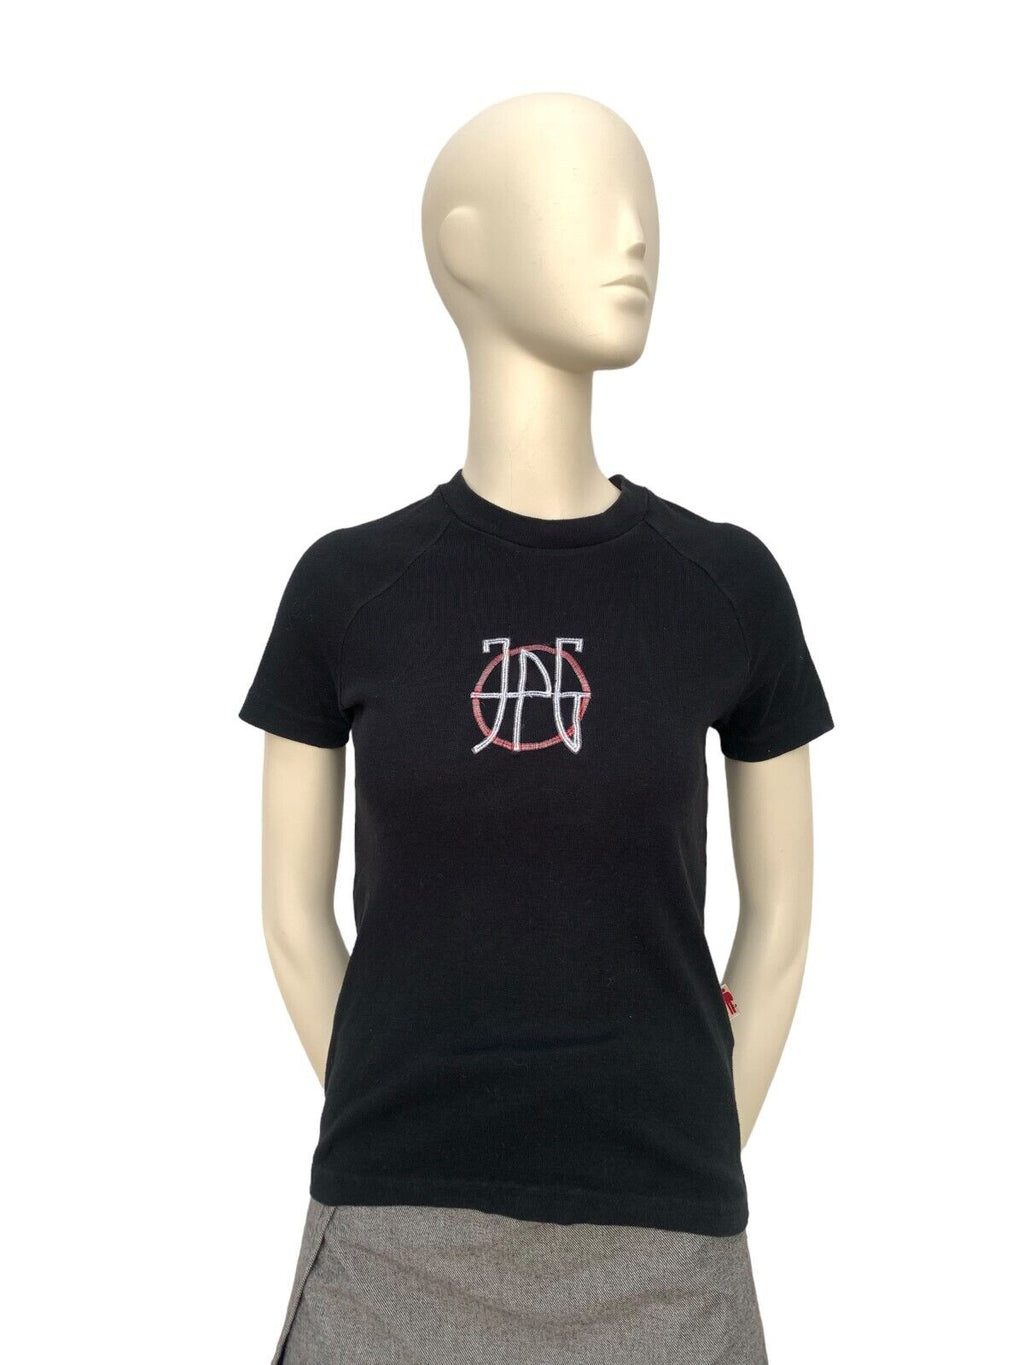 Vintage Black T-shirt  JPG logo